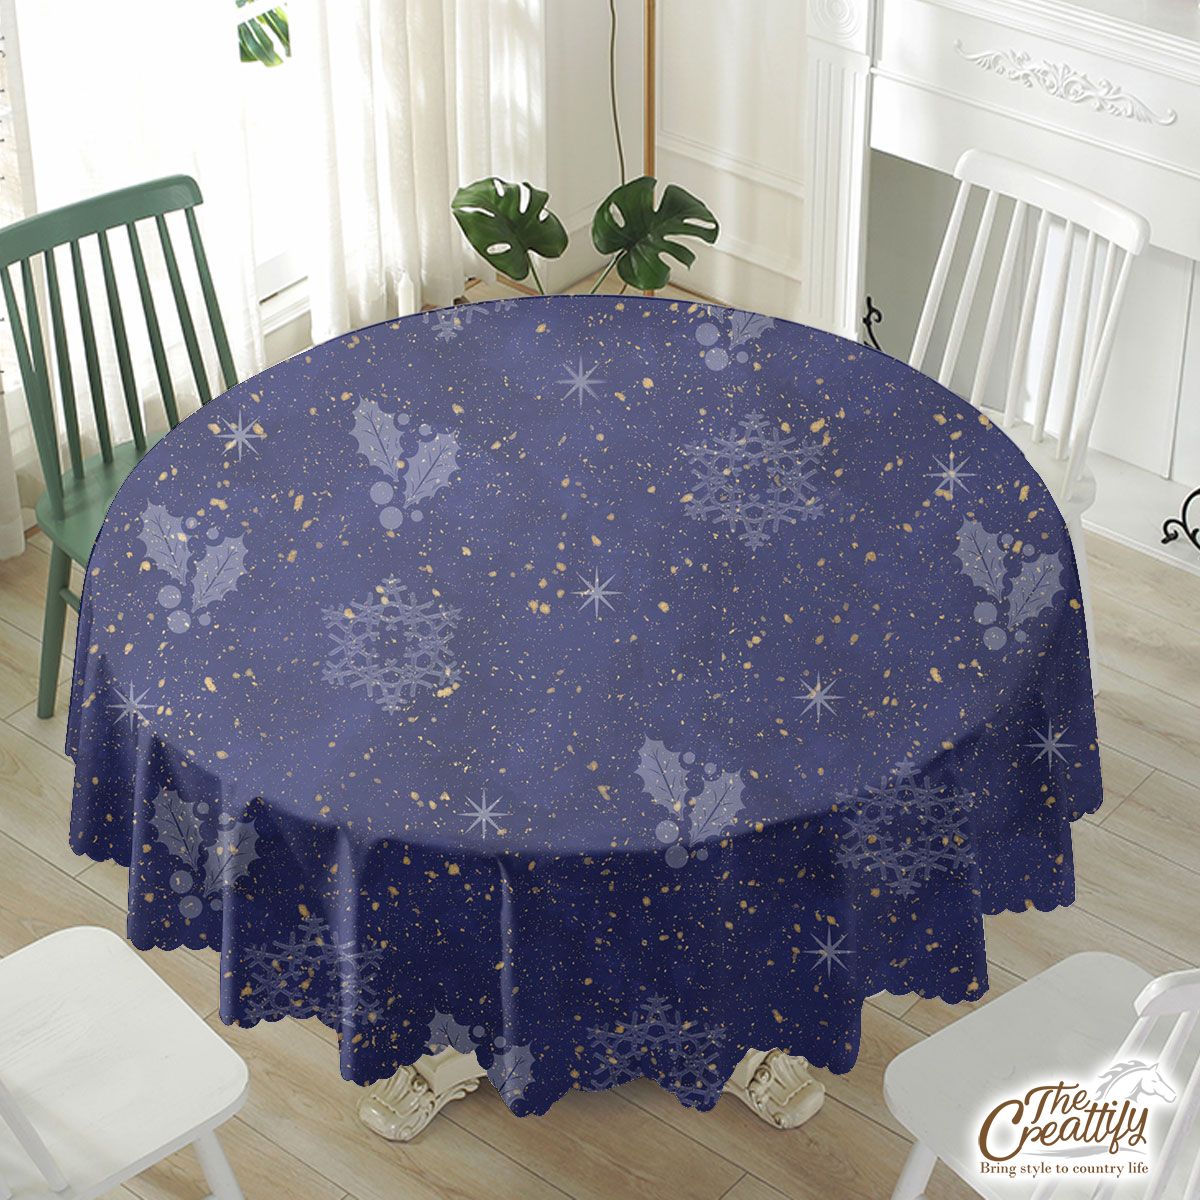 Holly Leaf, Snowfake On Dark Blue Background Waterproof Tablecloth